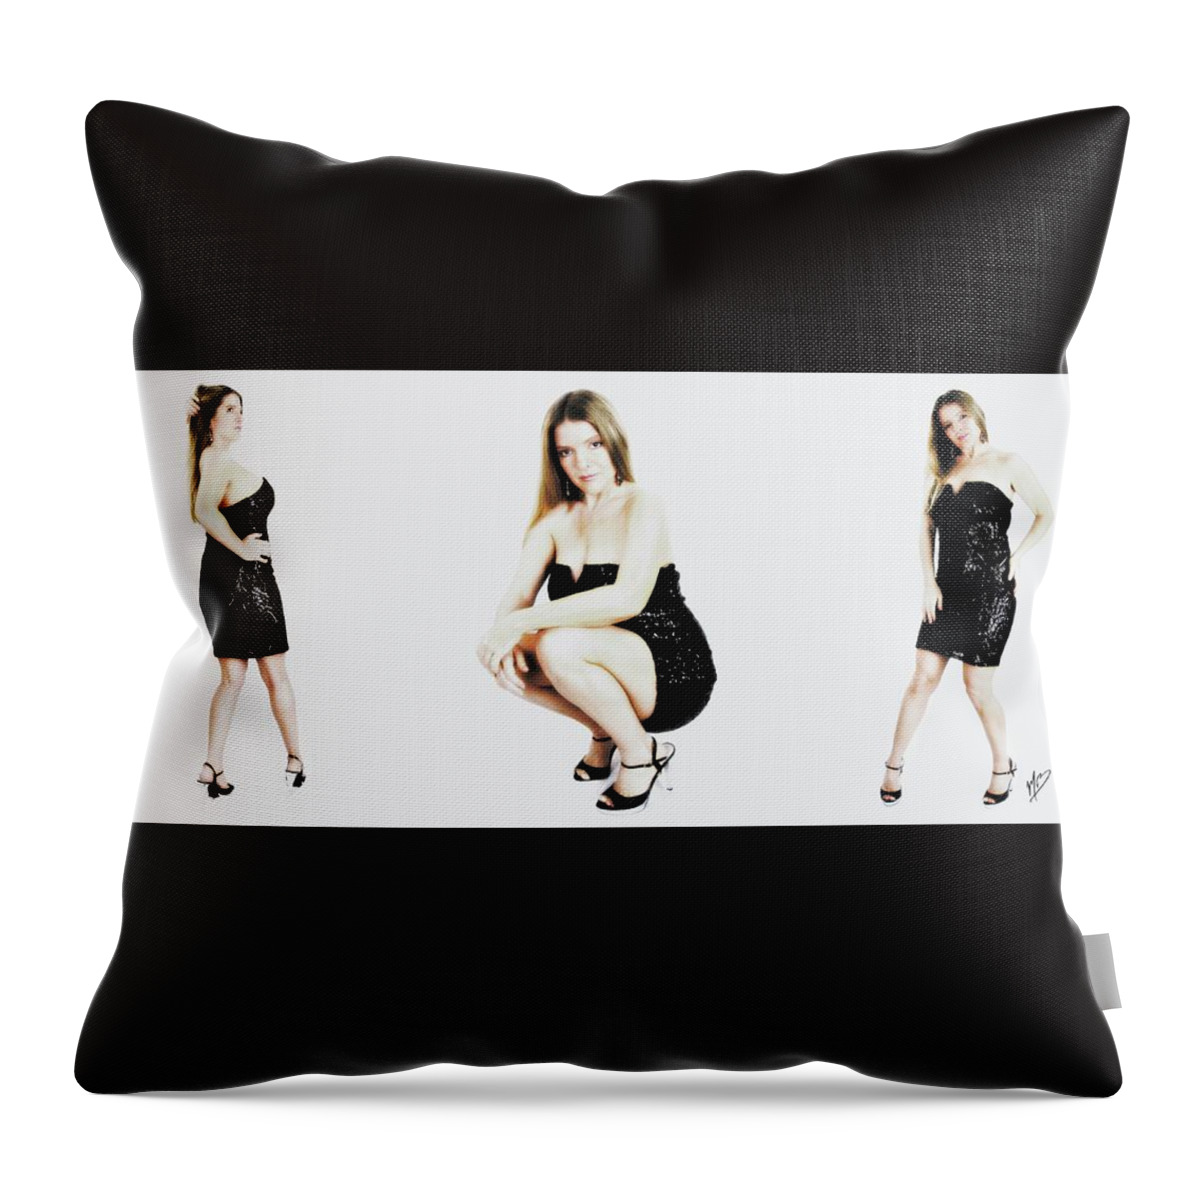 Woman Throw Pillow featuring the digital art Holly 5 by Mark Baranowski